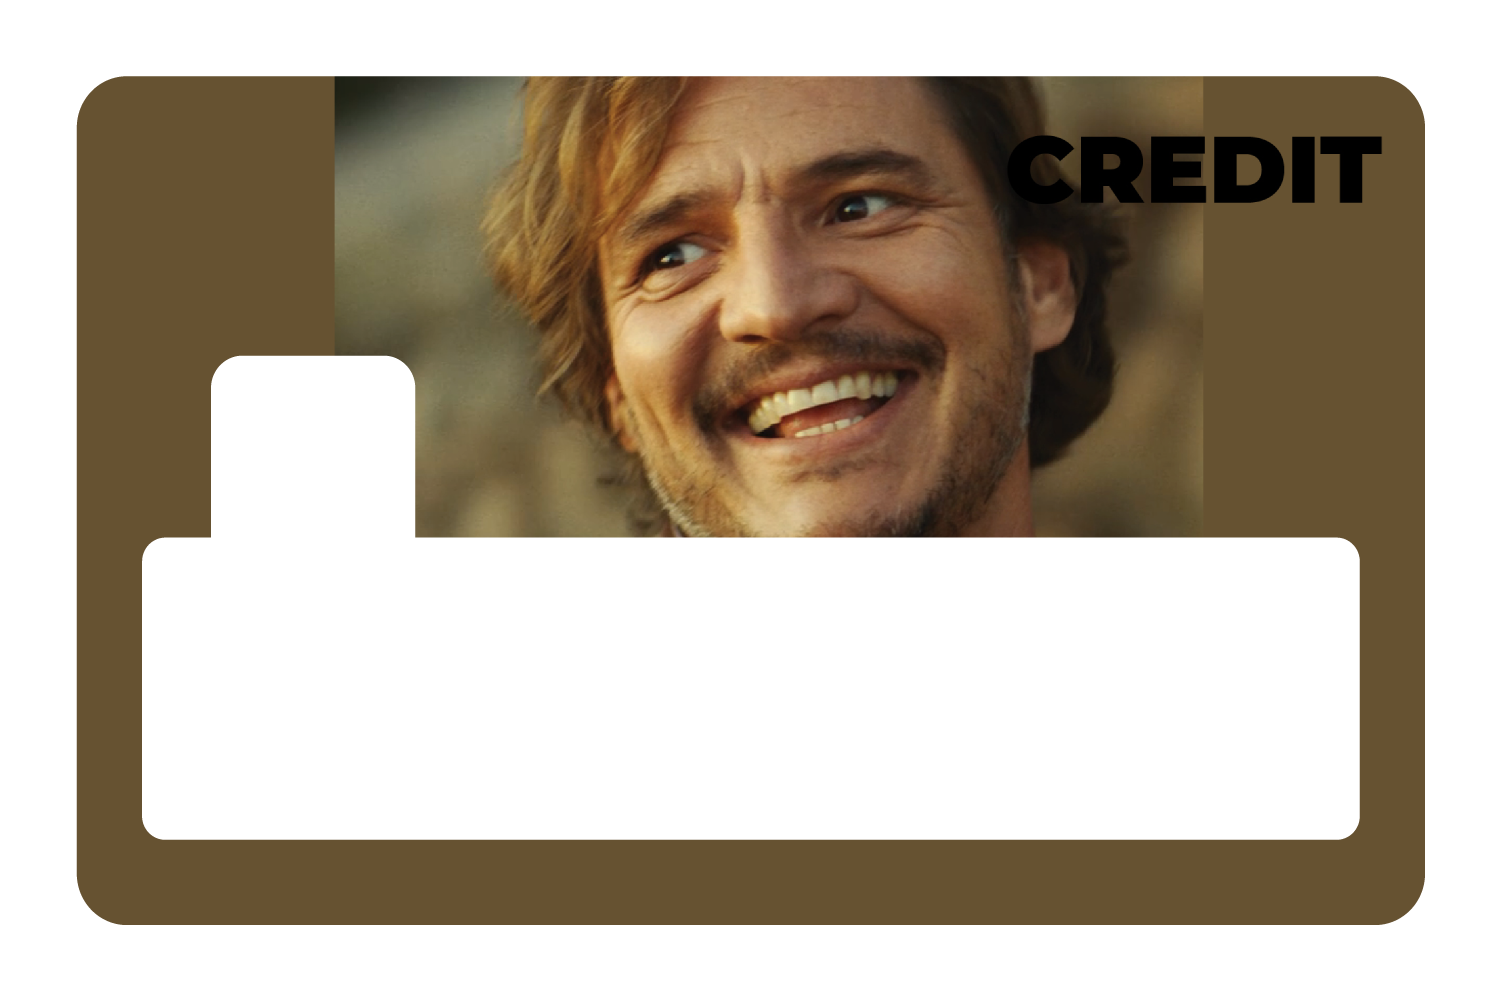 Pedro Credit